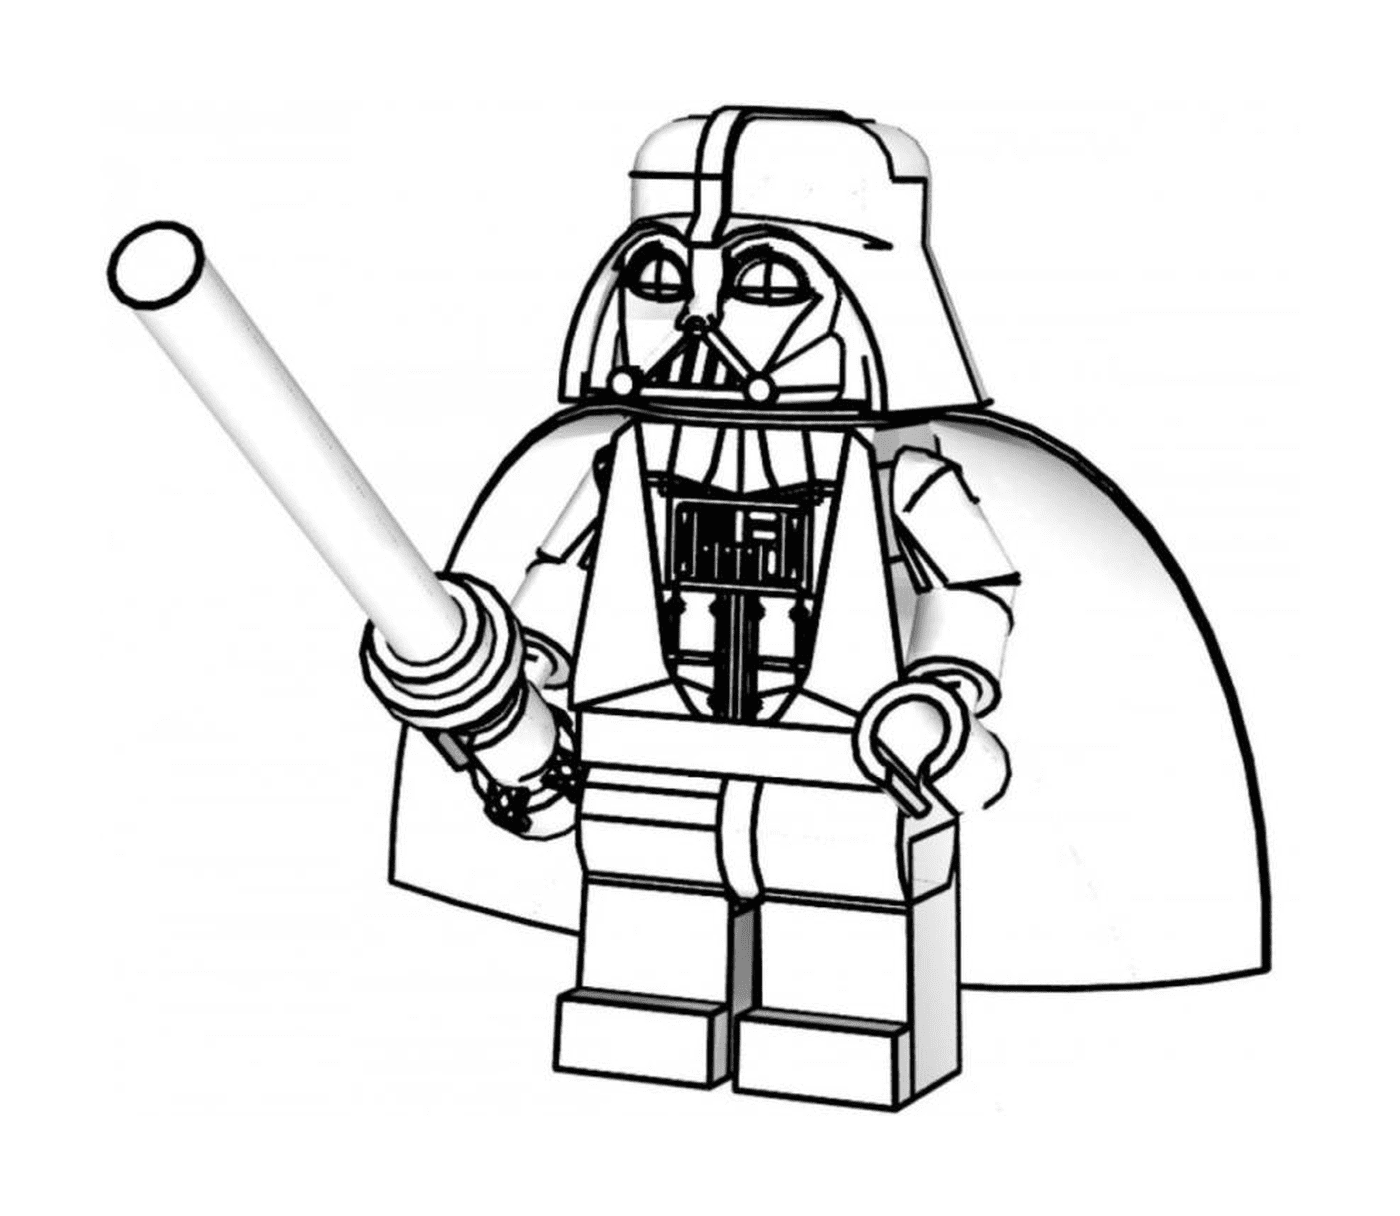  Darth Vader Lego with a sword 